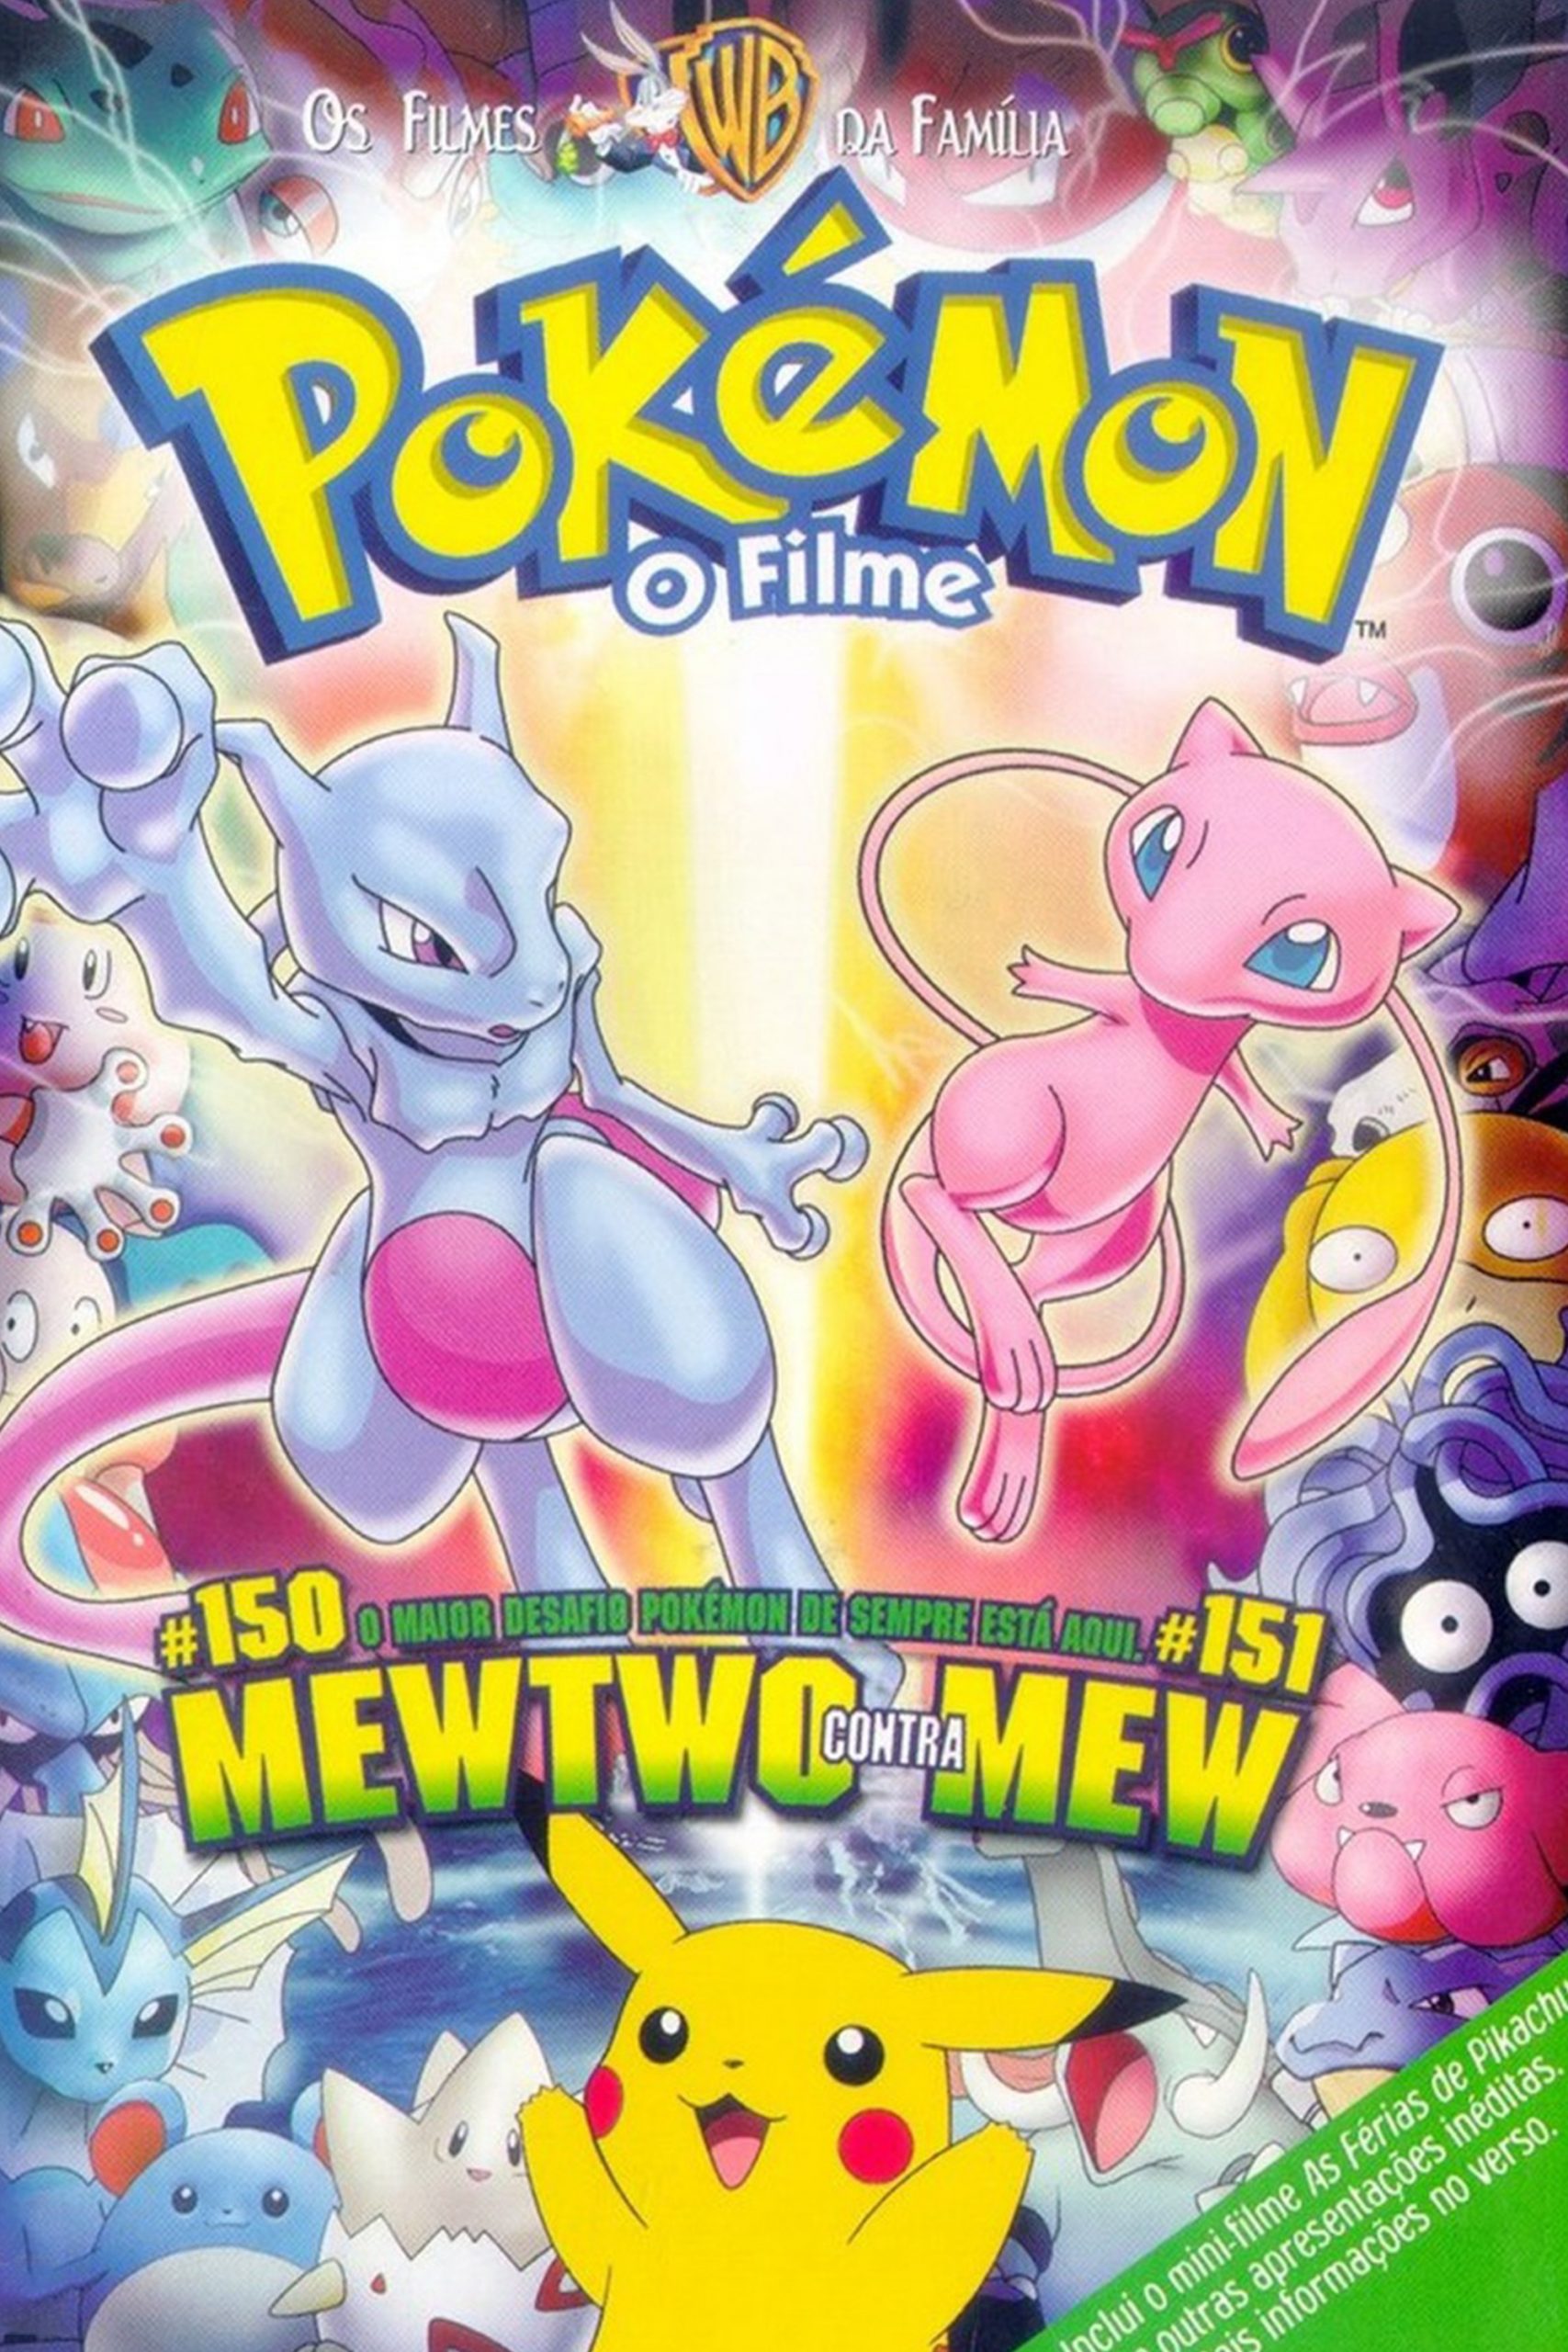 Watch 'Pokémon: O Filme - Mewtwo contra-ataca!' Online Streaming (Full Movie)